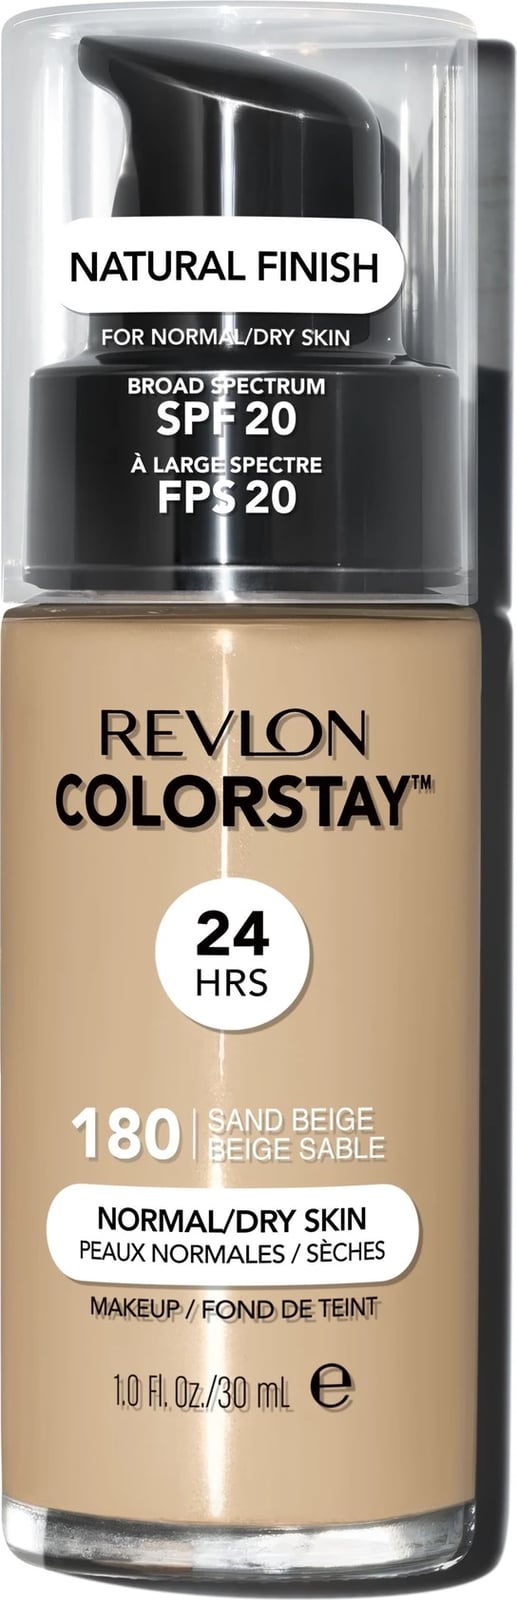 Krem pudër Revlon Colorstay 24H 180 Sand Beige, 30 ml